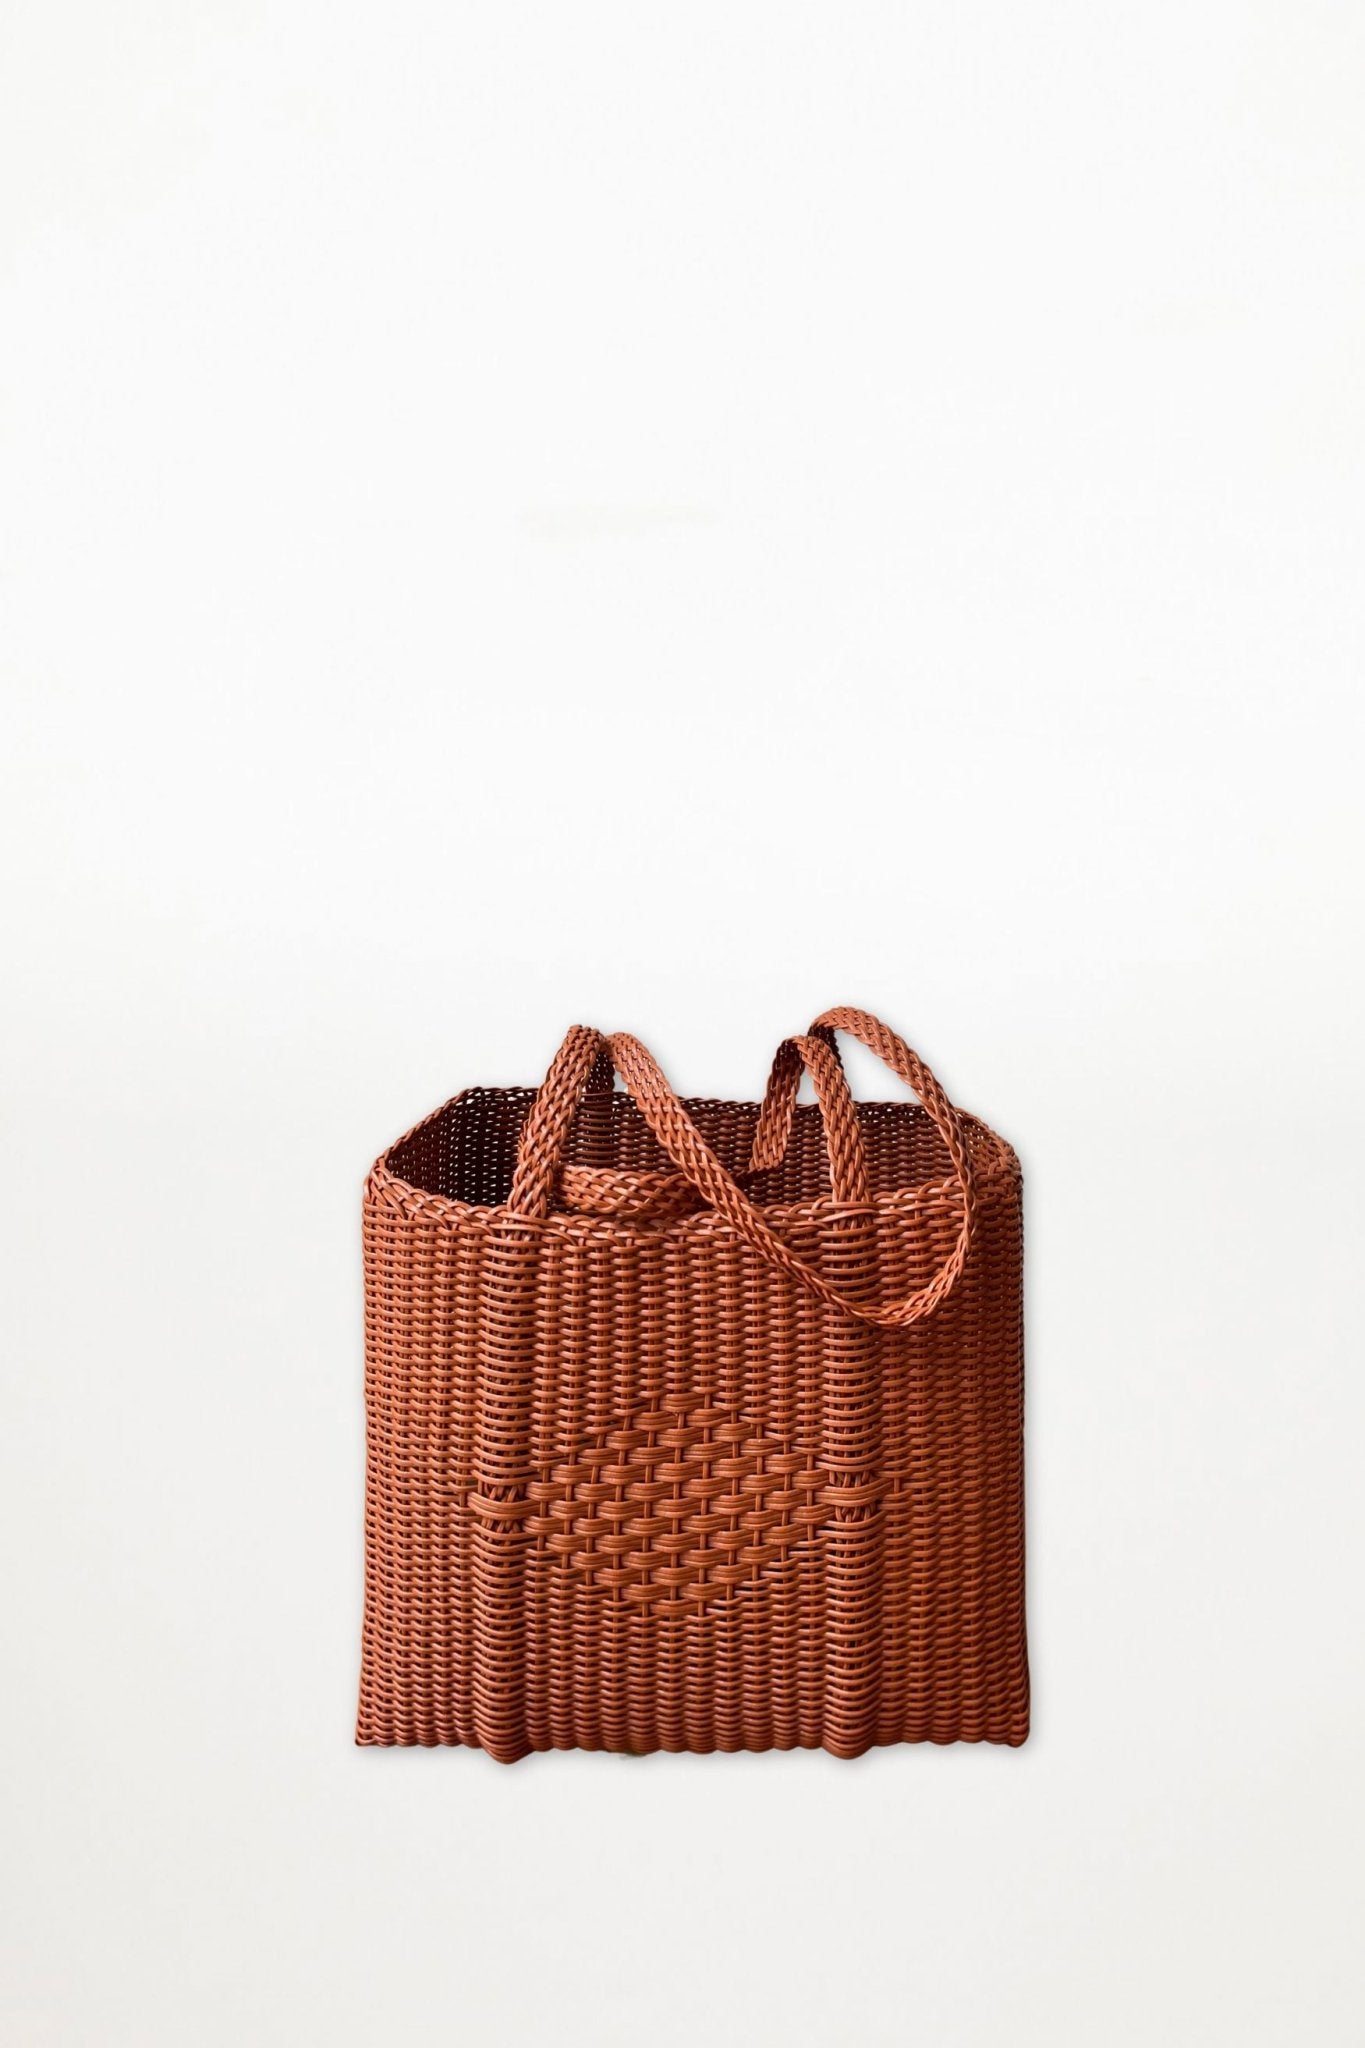 ixöq - Recycled Plastic Cesta Basket Tote Medium - Clay - Ensemble Studios